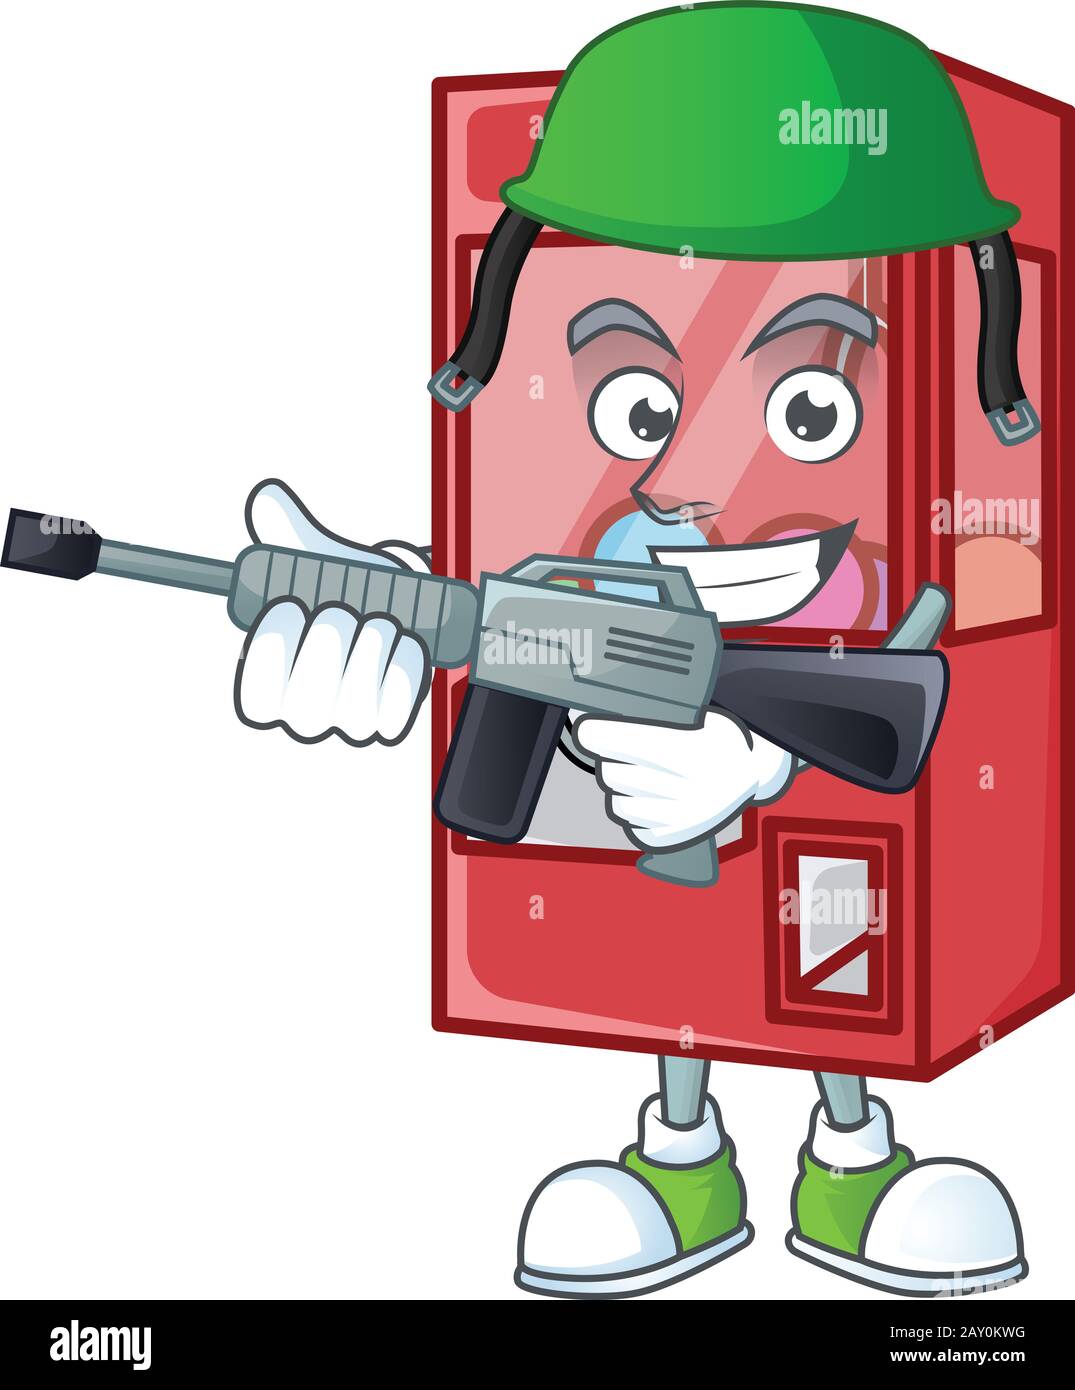 Toy claw machine mascot design in an Army uniform with machine gun Stock Vector